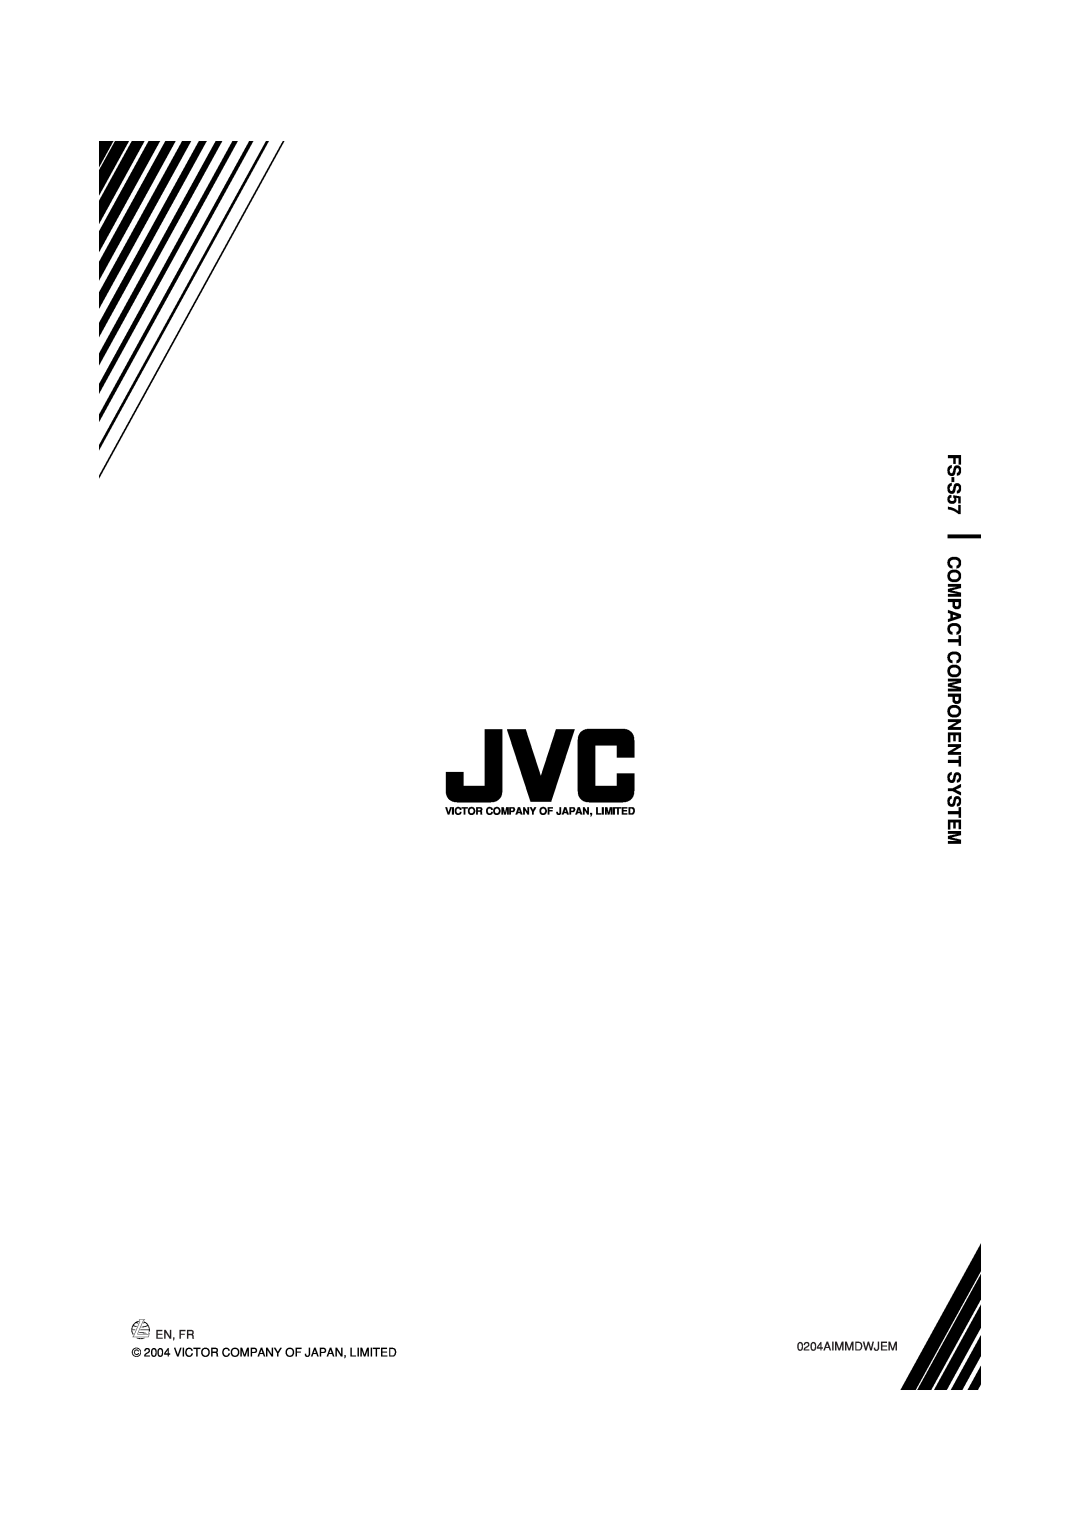 JVC GVT0134-001B, CA-FSS57 manual FS-S57COMPACT COMPONENT SYSTEM, En, Fr, 0204AIMMDWJEM, Victor Company Of Japan, Limited 